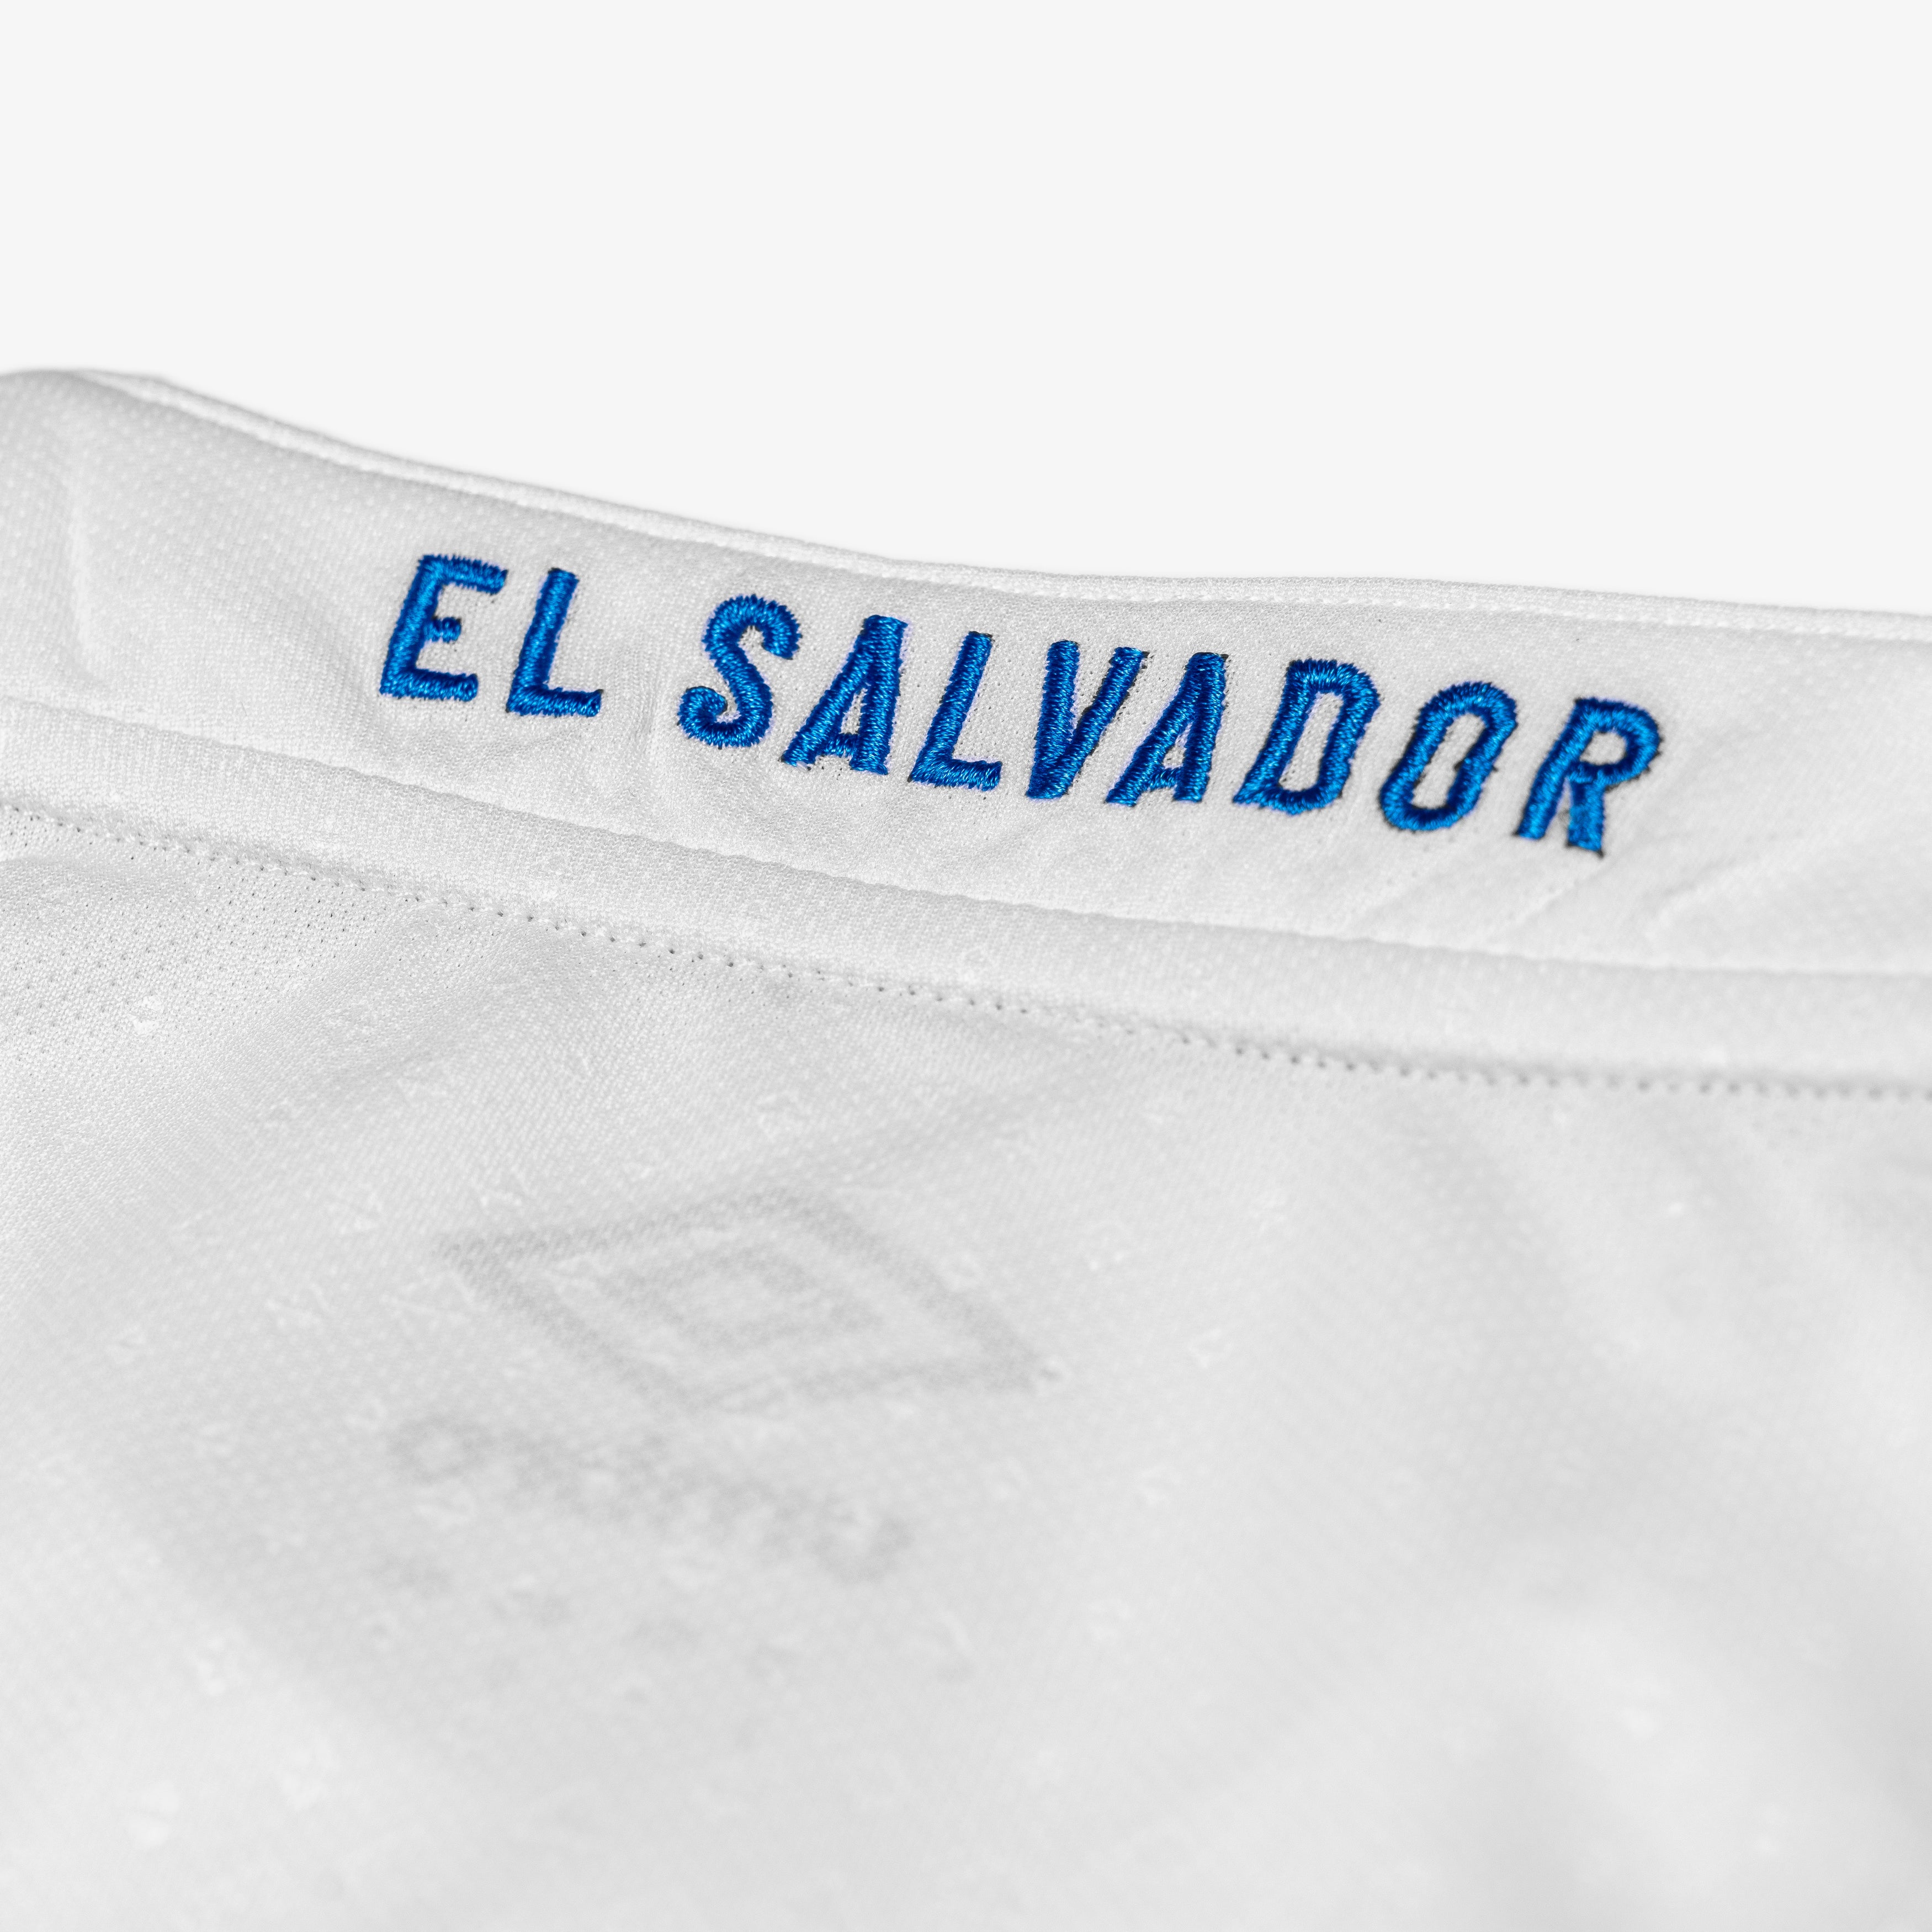 Umbro Men's El Salvador Away Game Soccer Shorts, White Small at